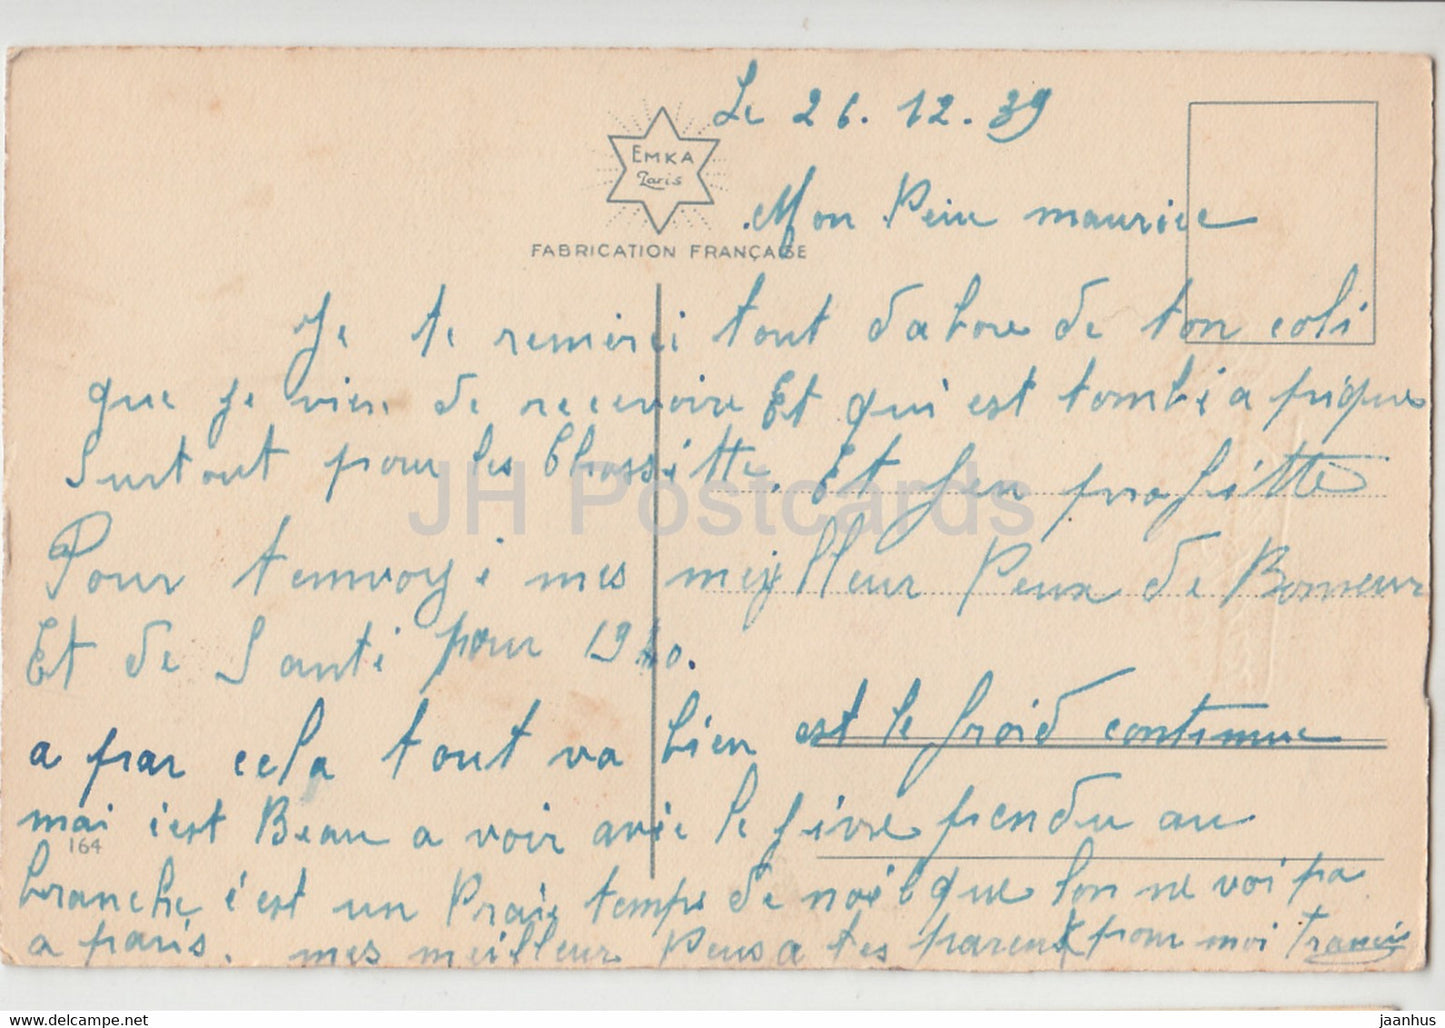 Birthday Greeting Card - Bonne Annee - flowers - tulips - EMKA Paris - illustration - old postcard 1939 - France - used